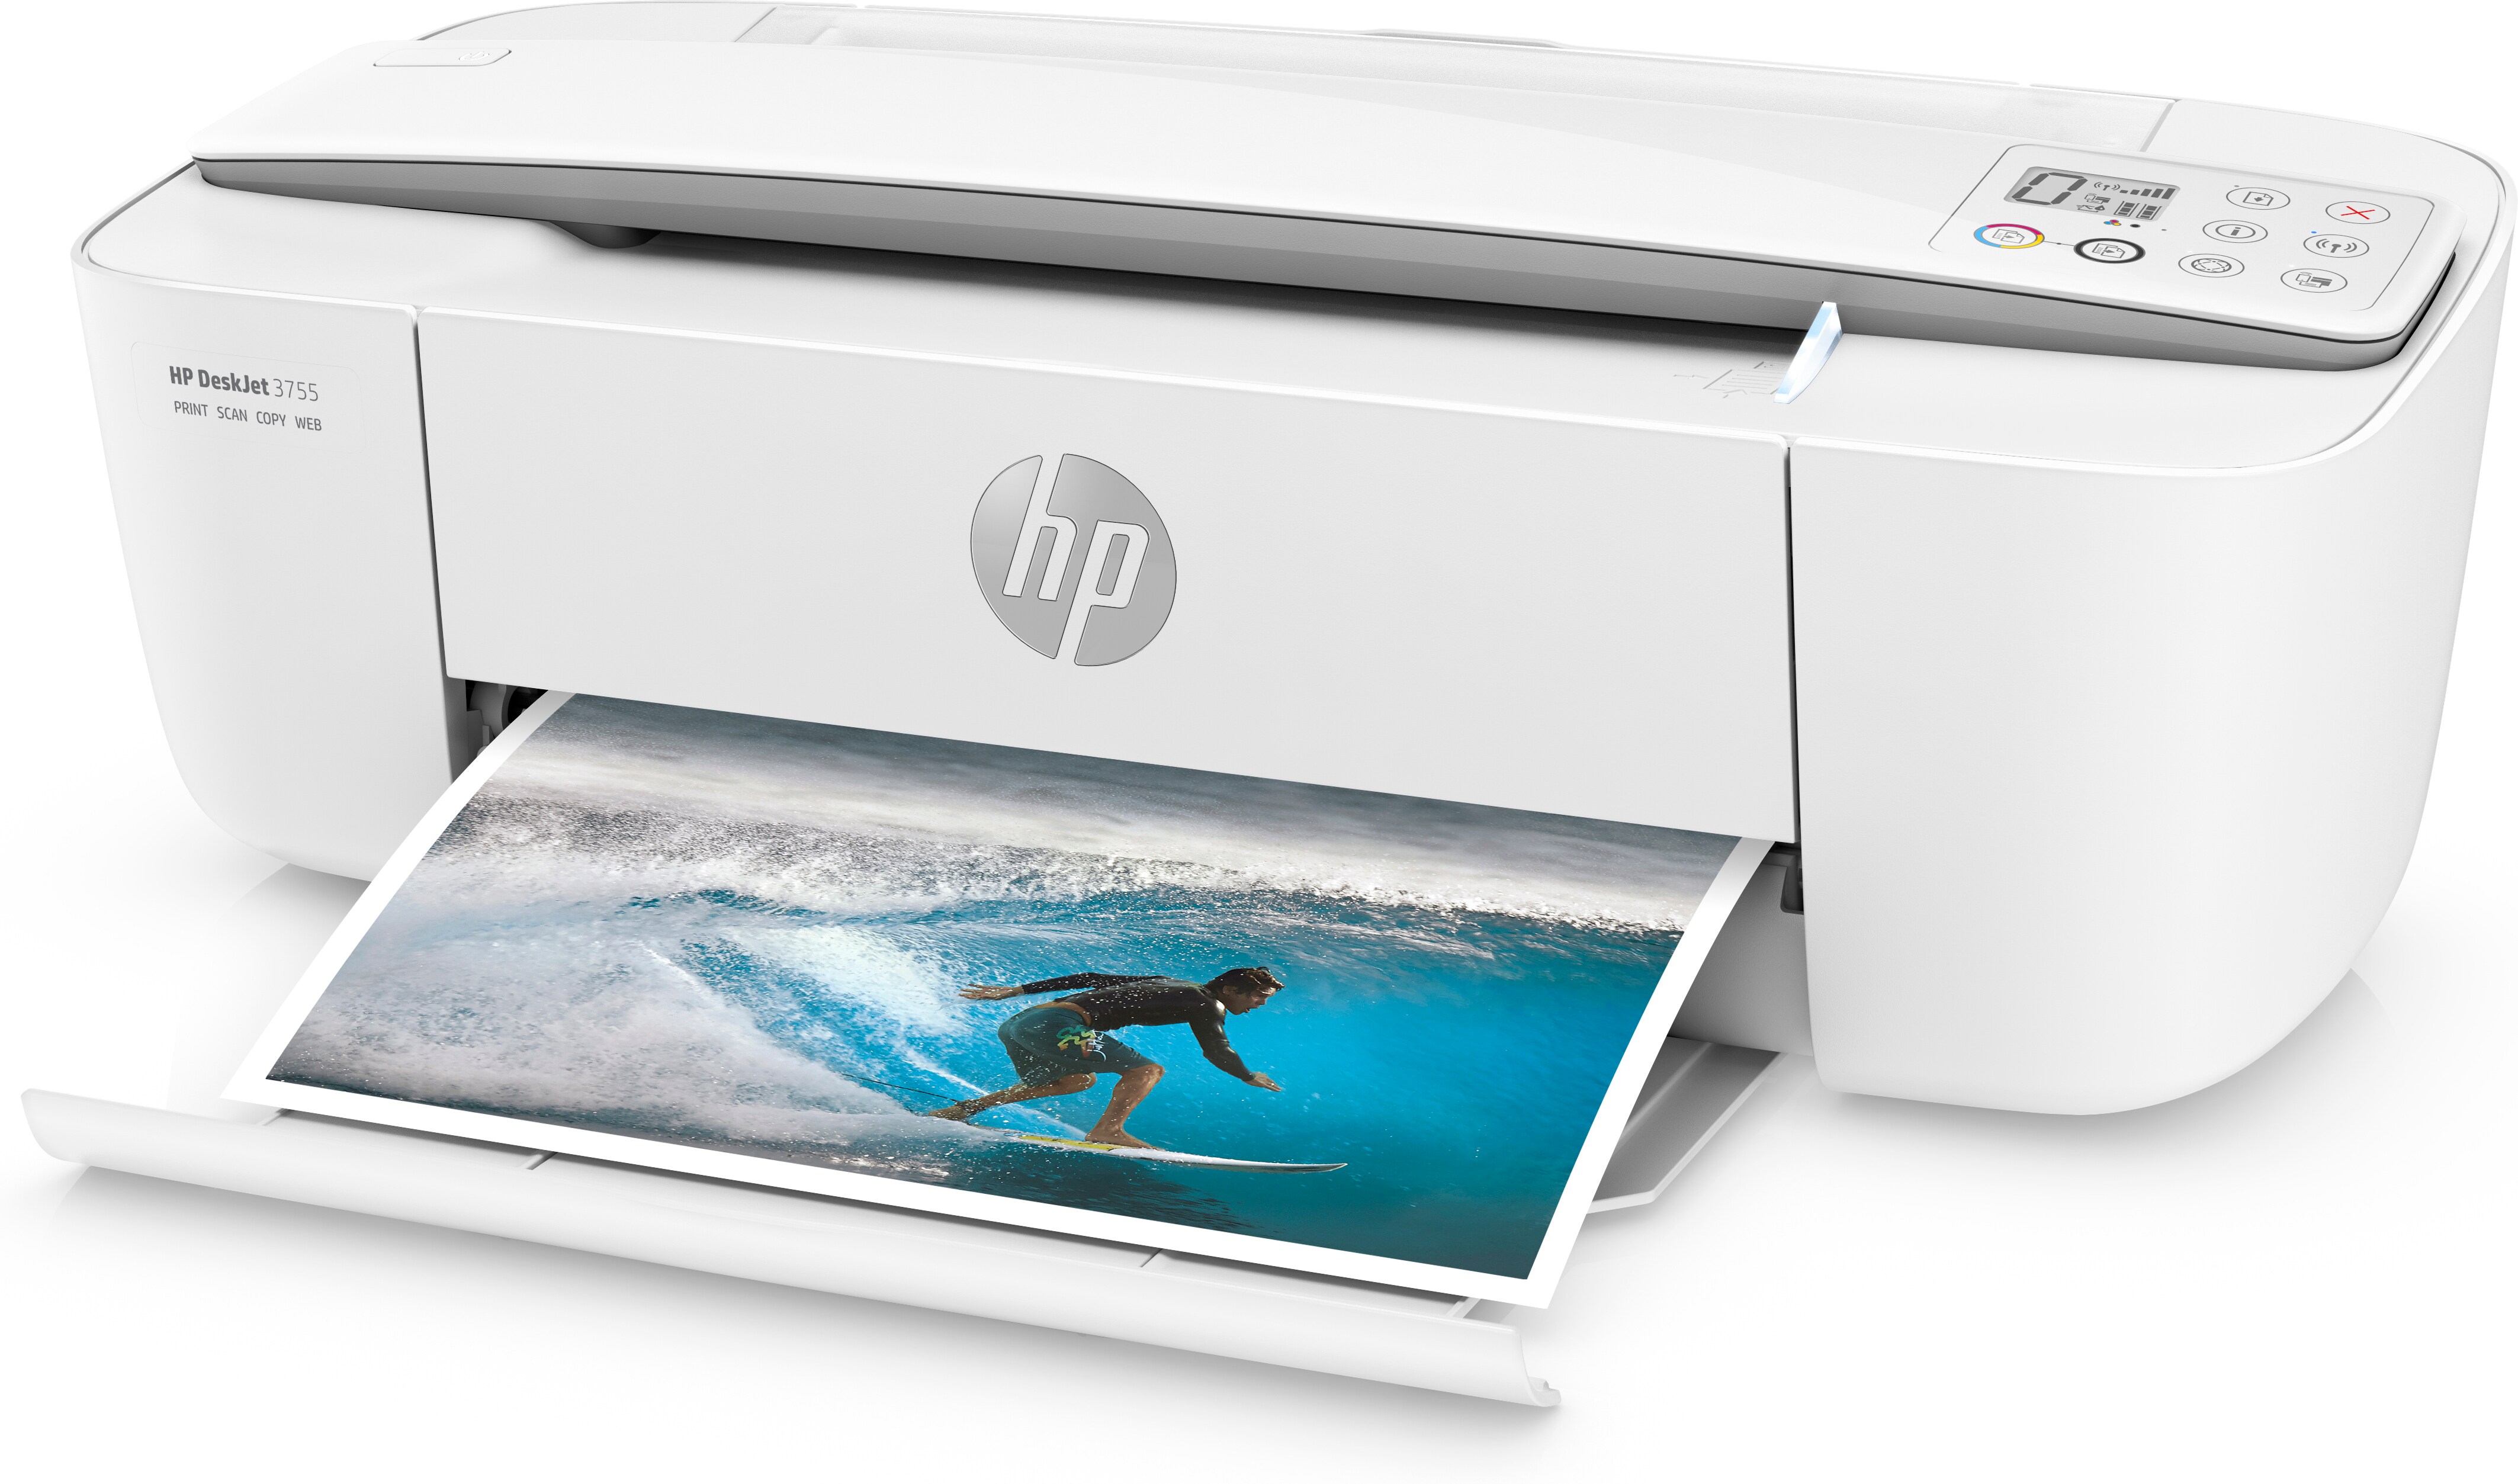 HP DeskJet 3755 All-in-One Inkjet Printer, Color Mobile Print, Copy, Scan, - image 4 of 7